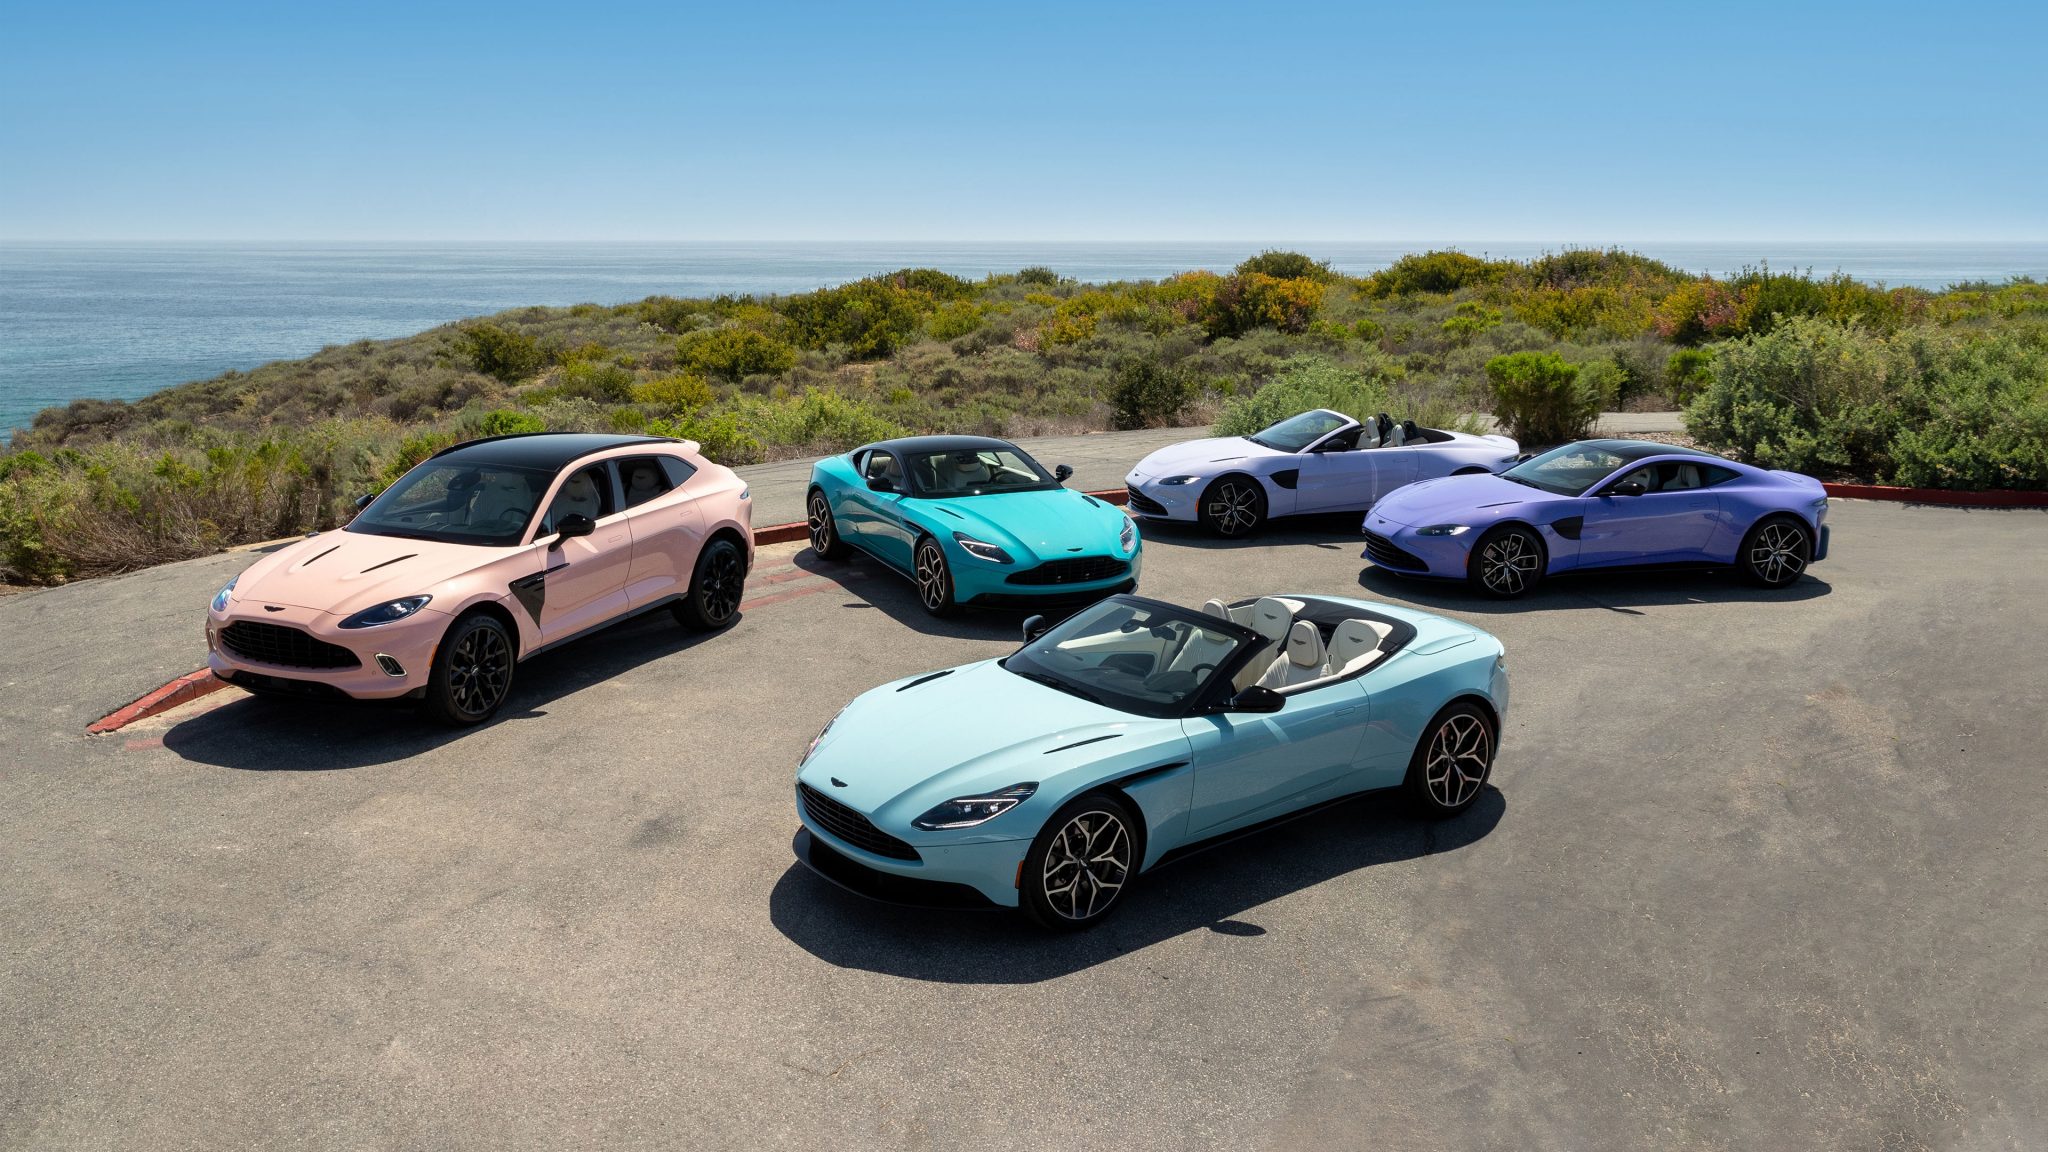 The Aston Martin Pastel Collection